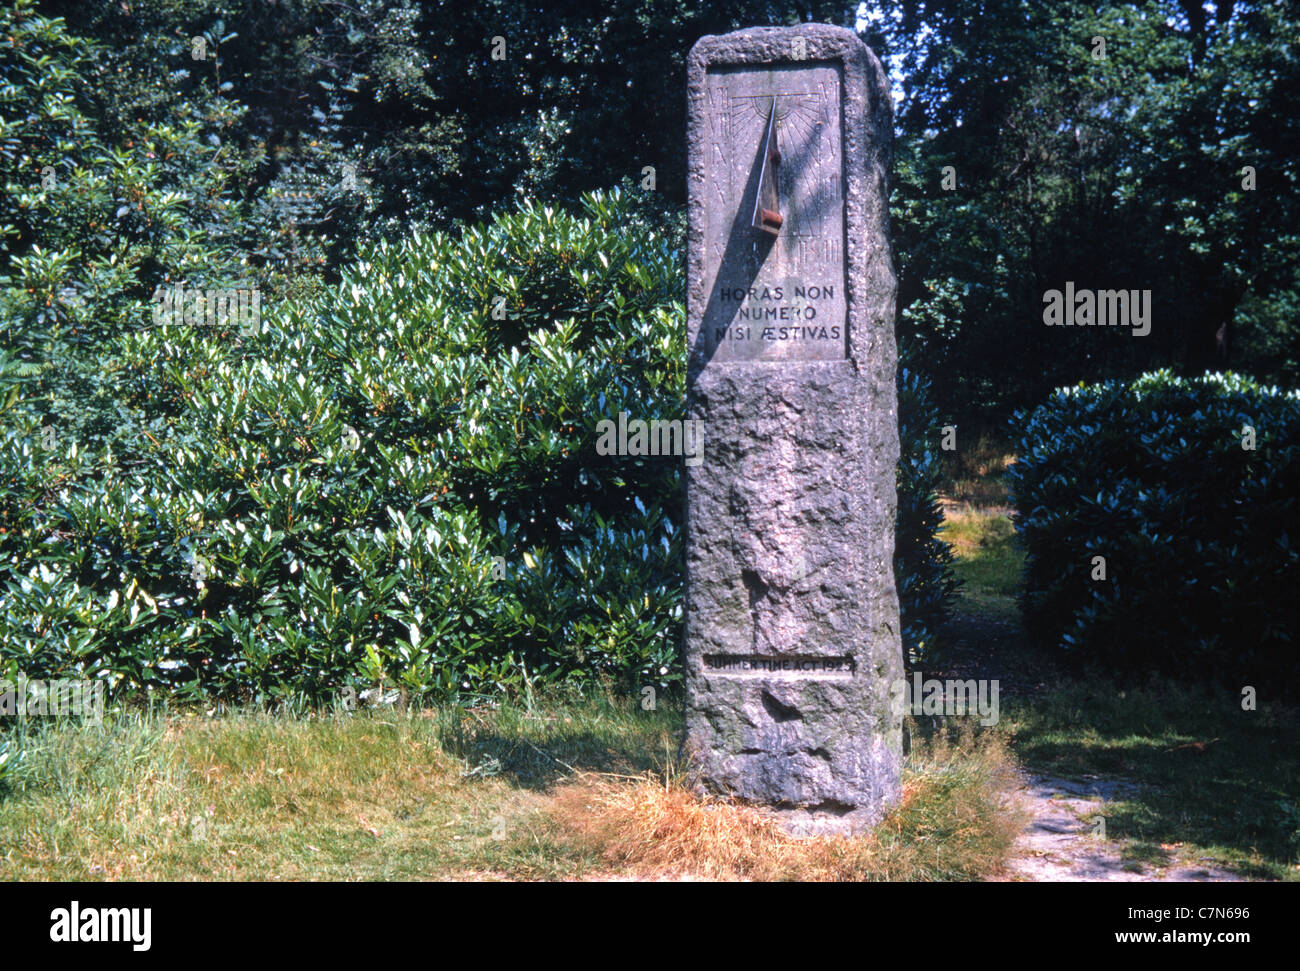 Willett memorial stone, Petts Wood, Kent, UK Banque D'Images